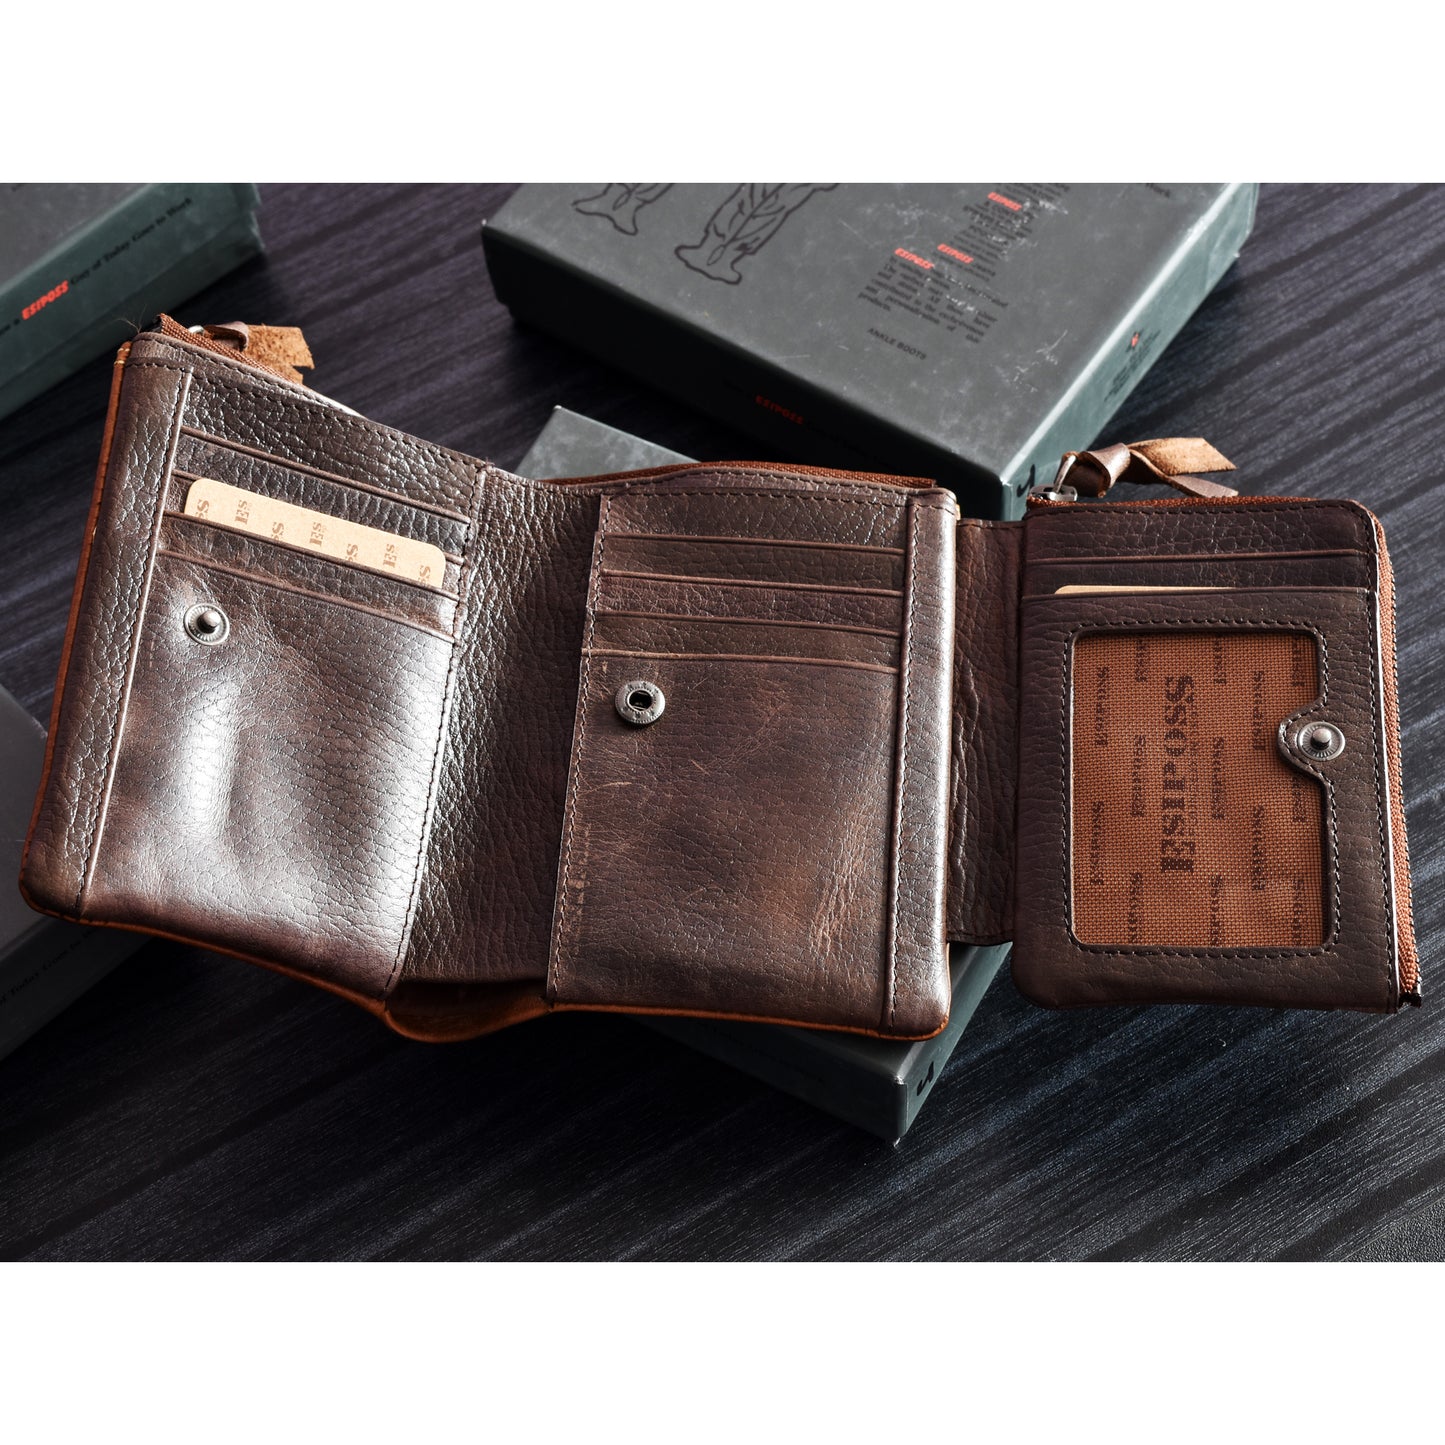 Original Esiposs Leather Wallet | Pocket Size Wallet | EPS 44